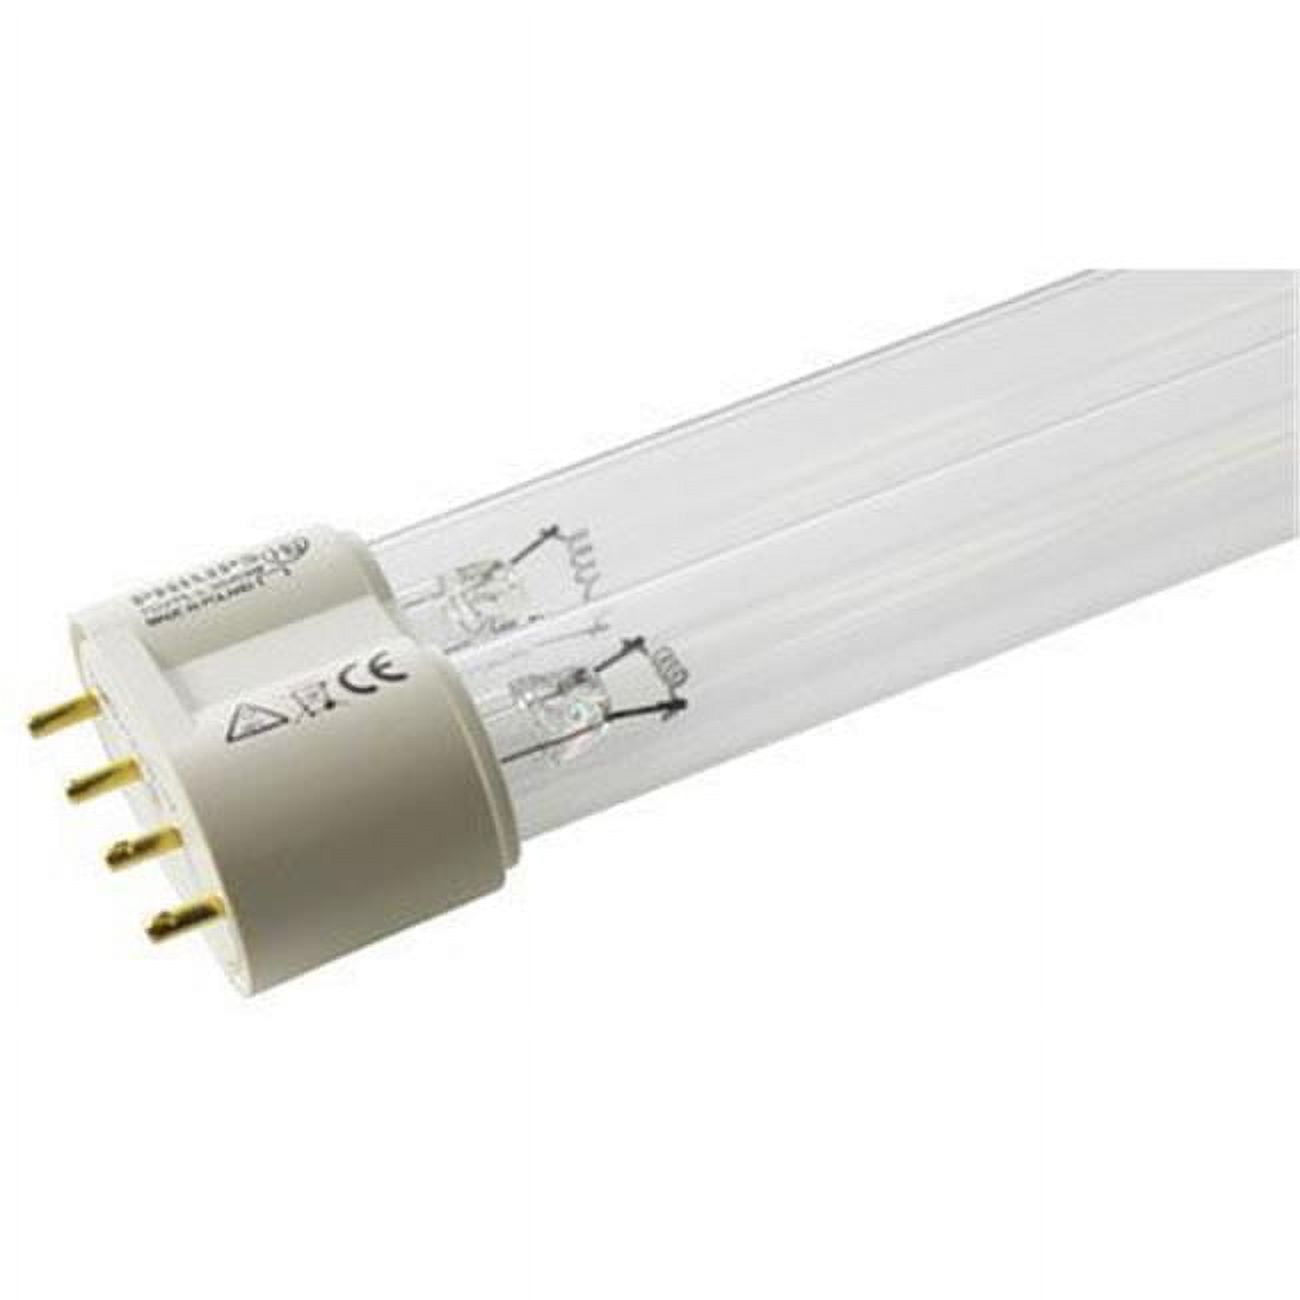 Dny-170254 Tuv Pl-l 55w-4p Hf Germicidal Light Bulb